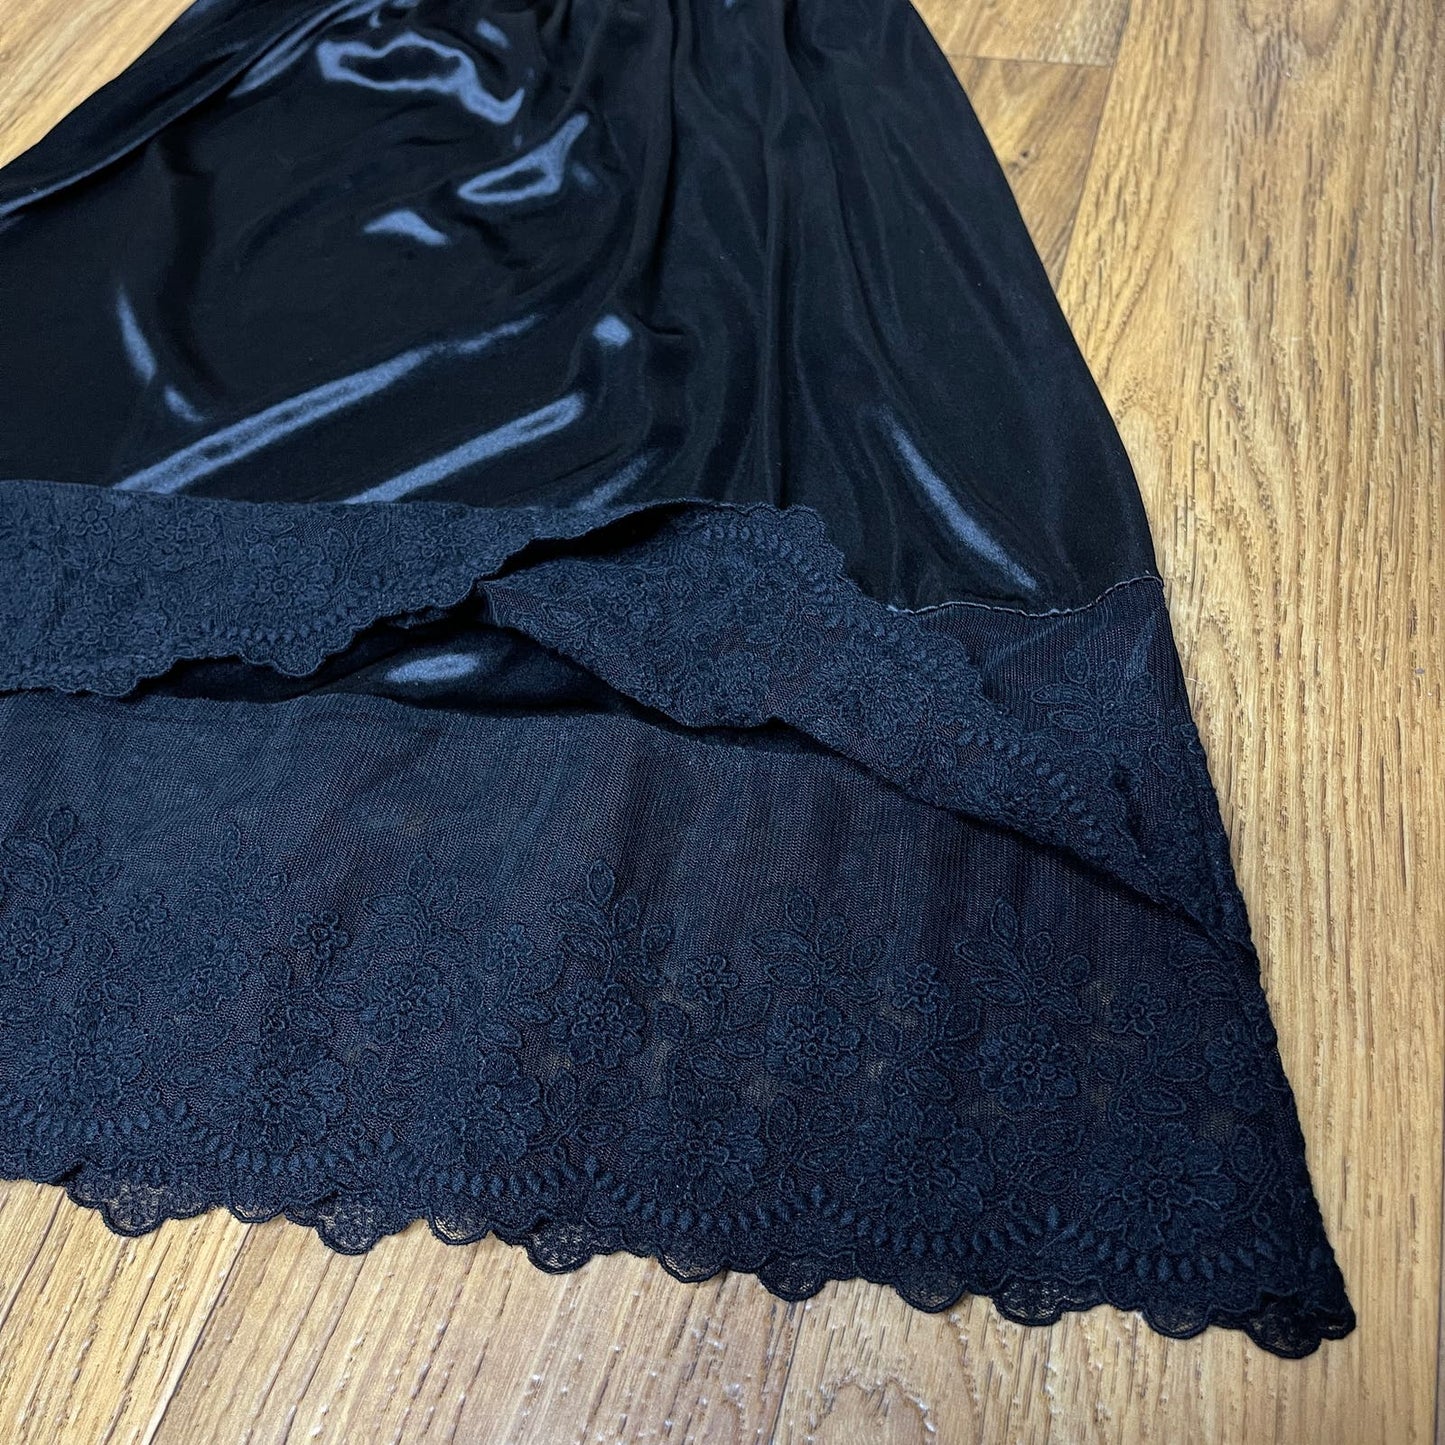 Vintage 90s Black Half Slip with Double Lace Hem Skirt Style by Melody Size S